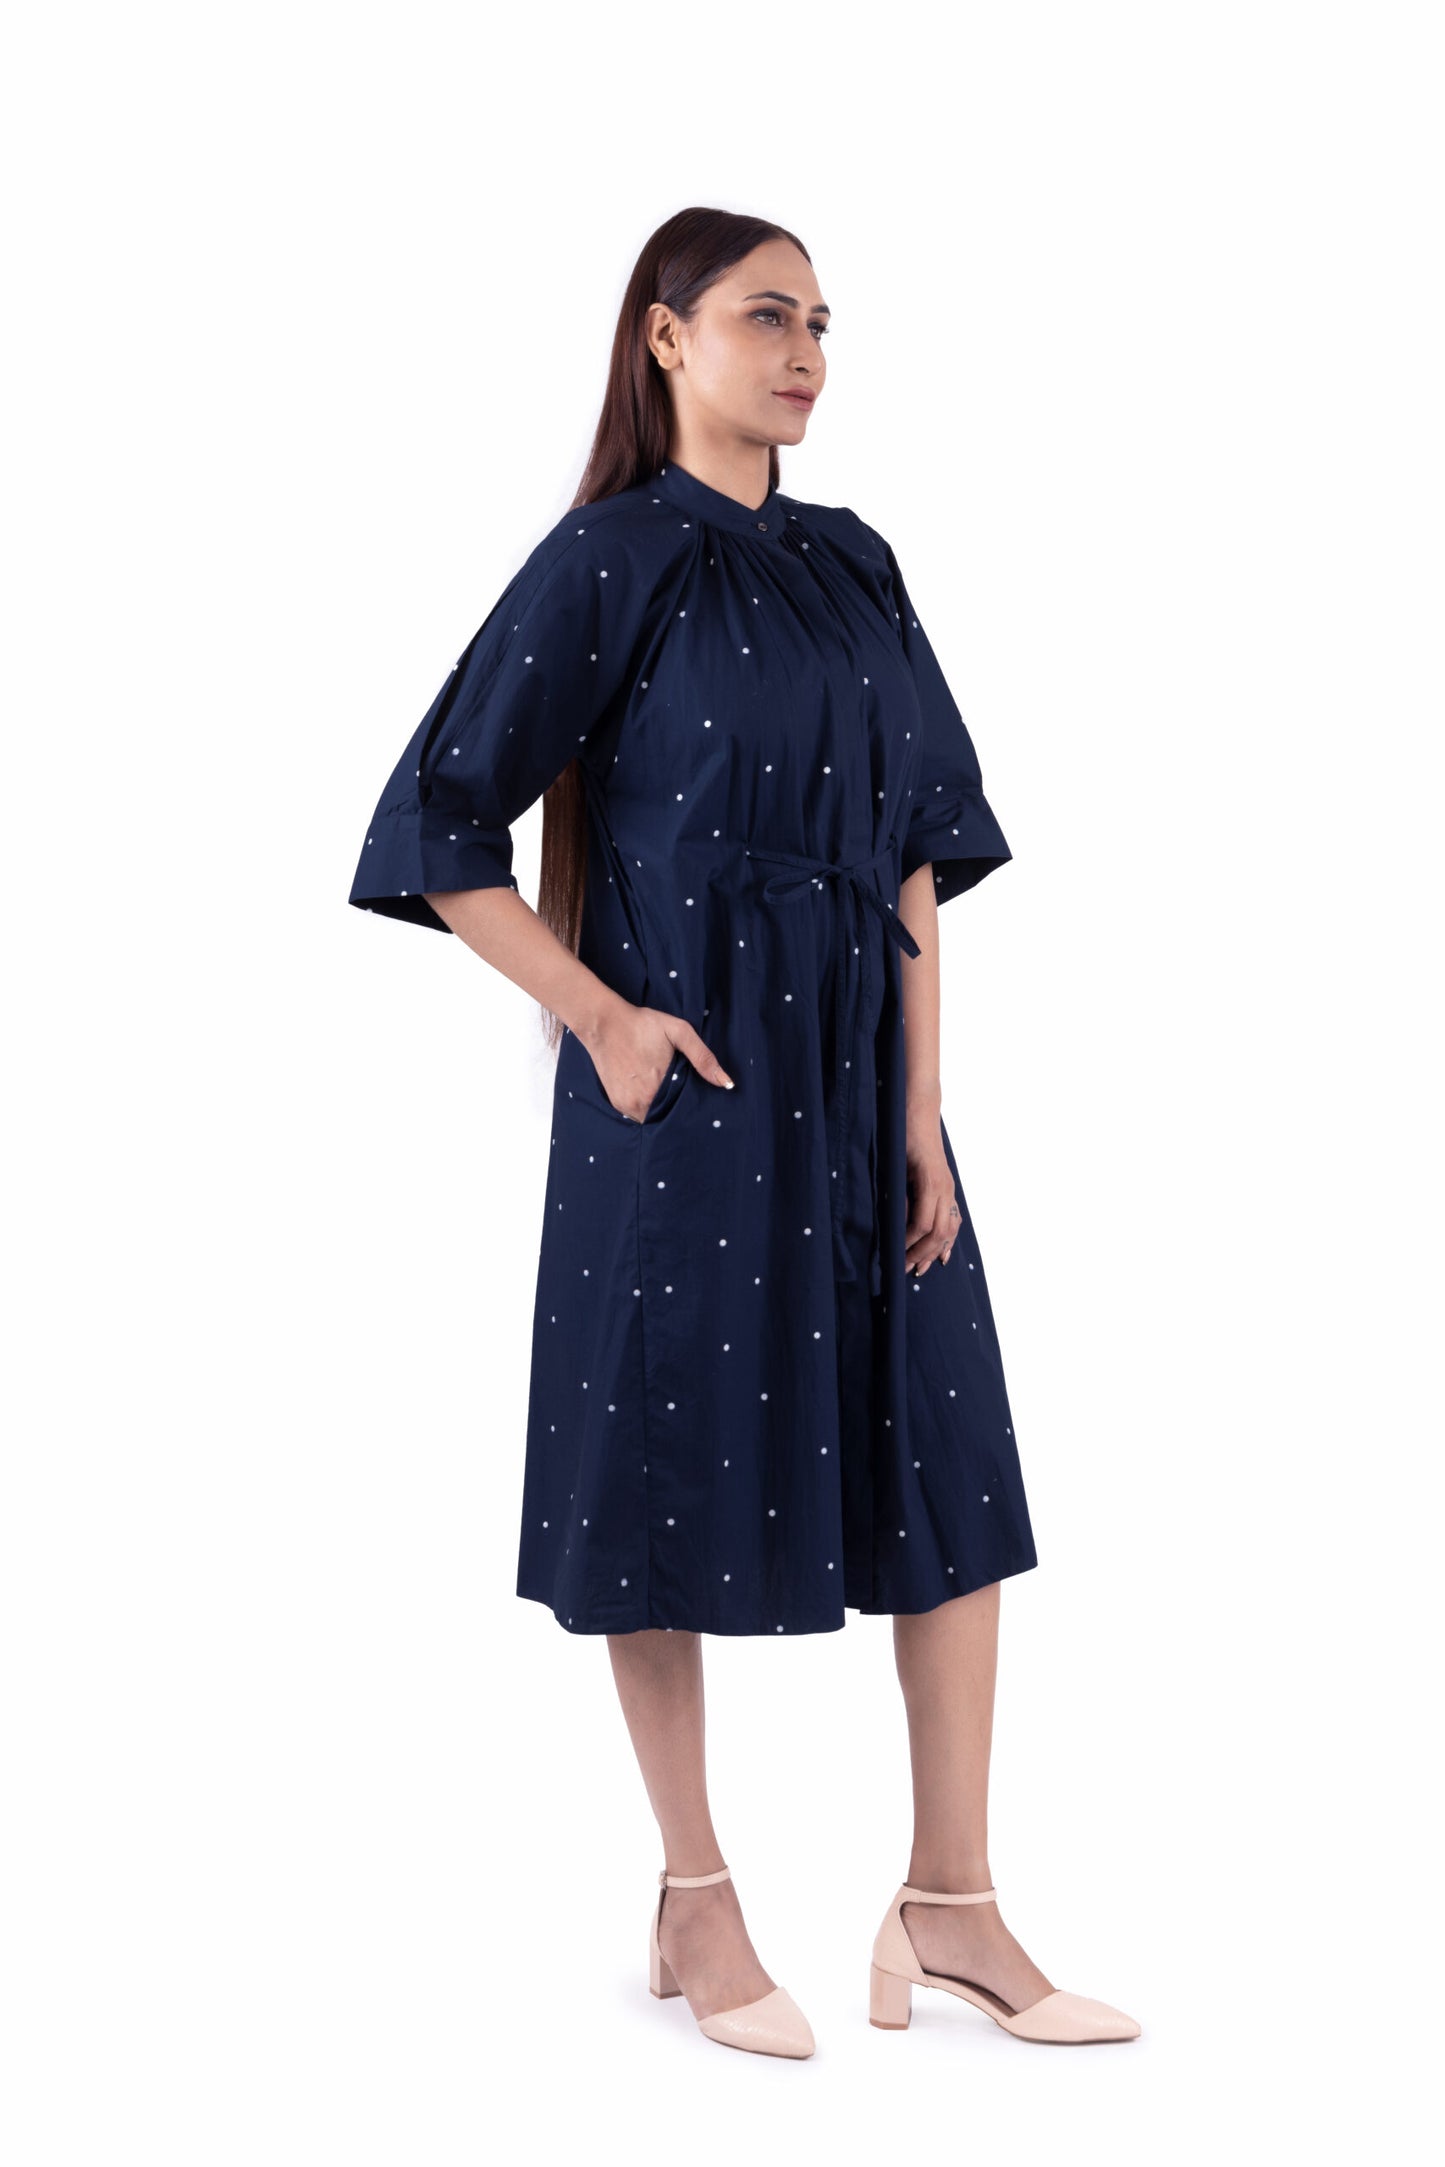 Navy Blue Dot Print Pleated Dress